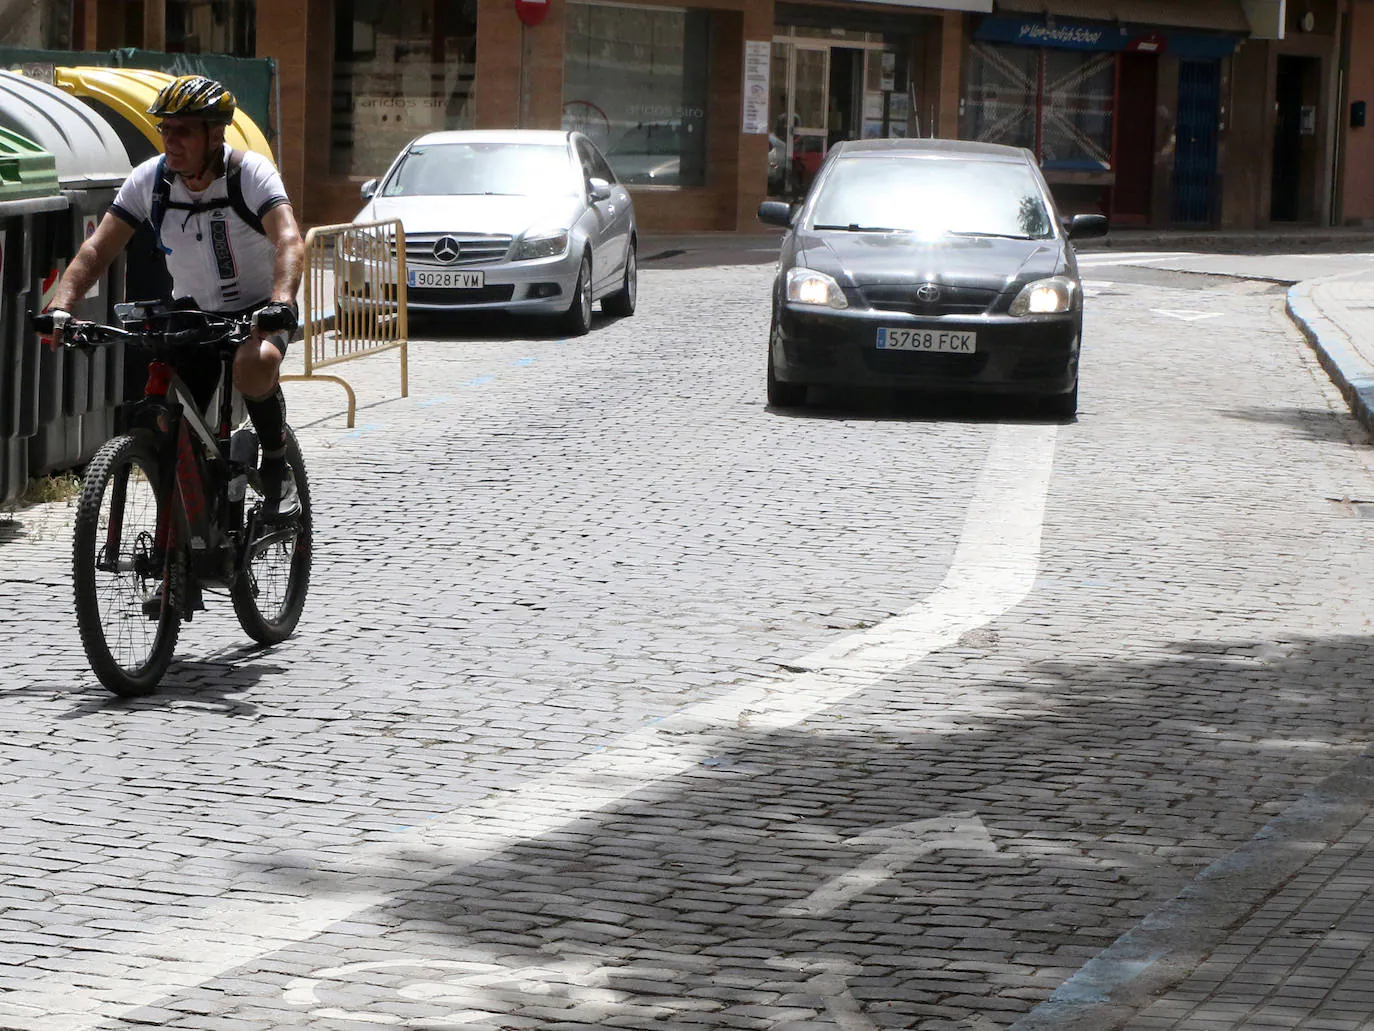 Carril bici de Segovia en el barrio de Santa Eulalia.